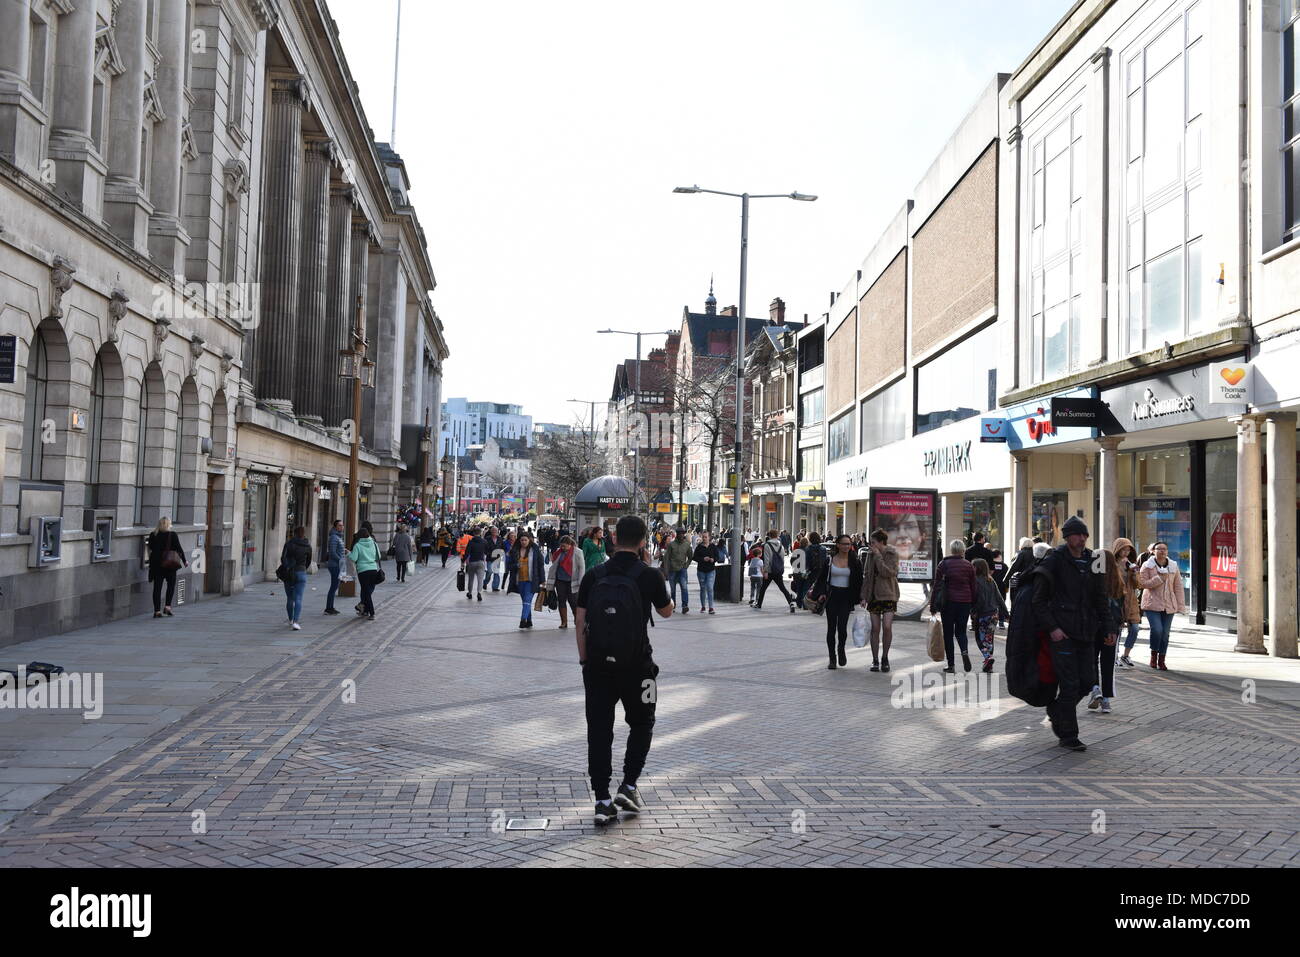 People Shopping in Nottingham - England Stock Photo